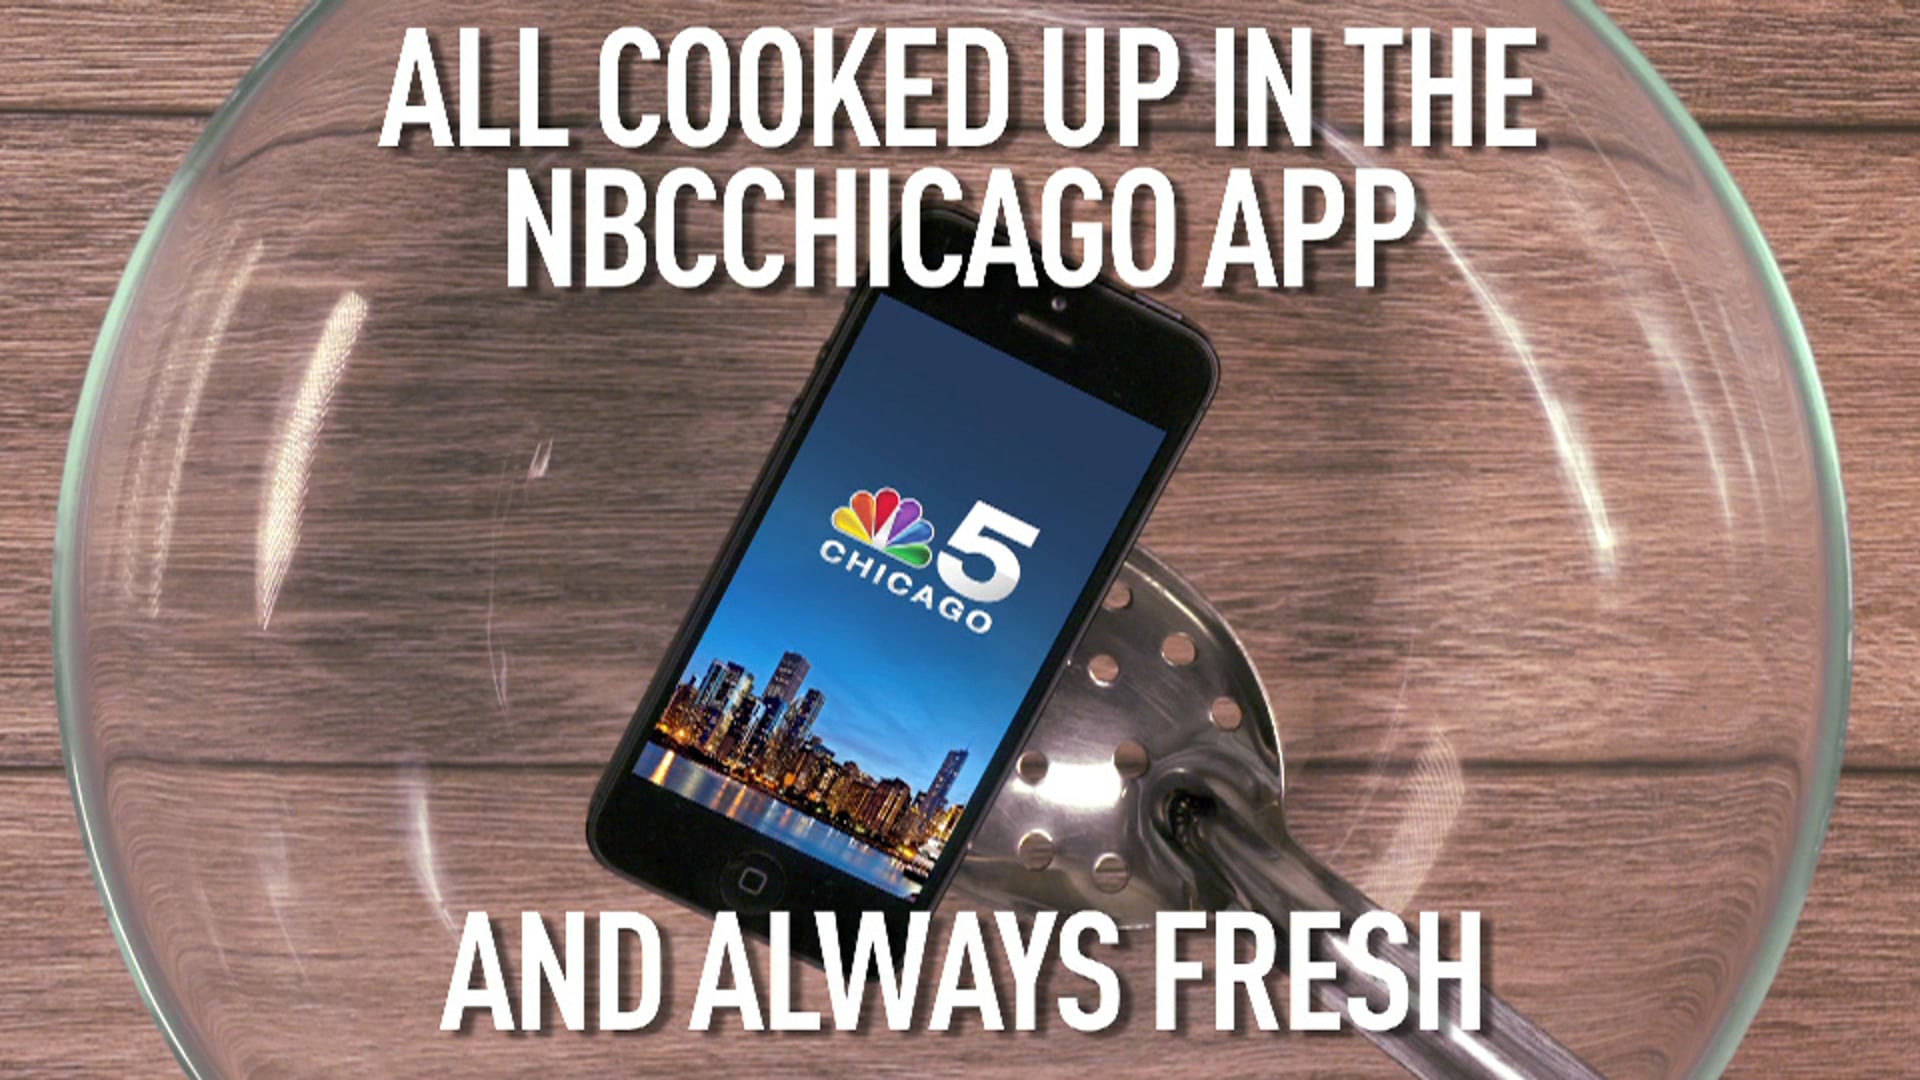 NBC Chicago Digital Campaign